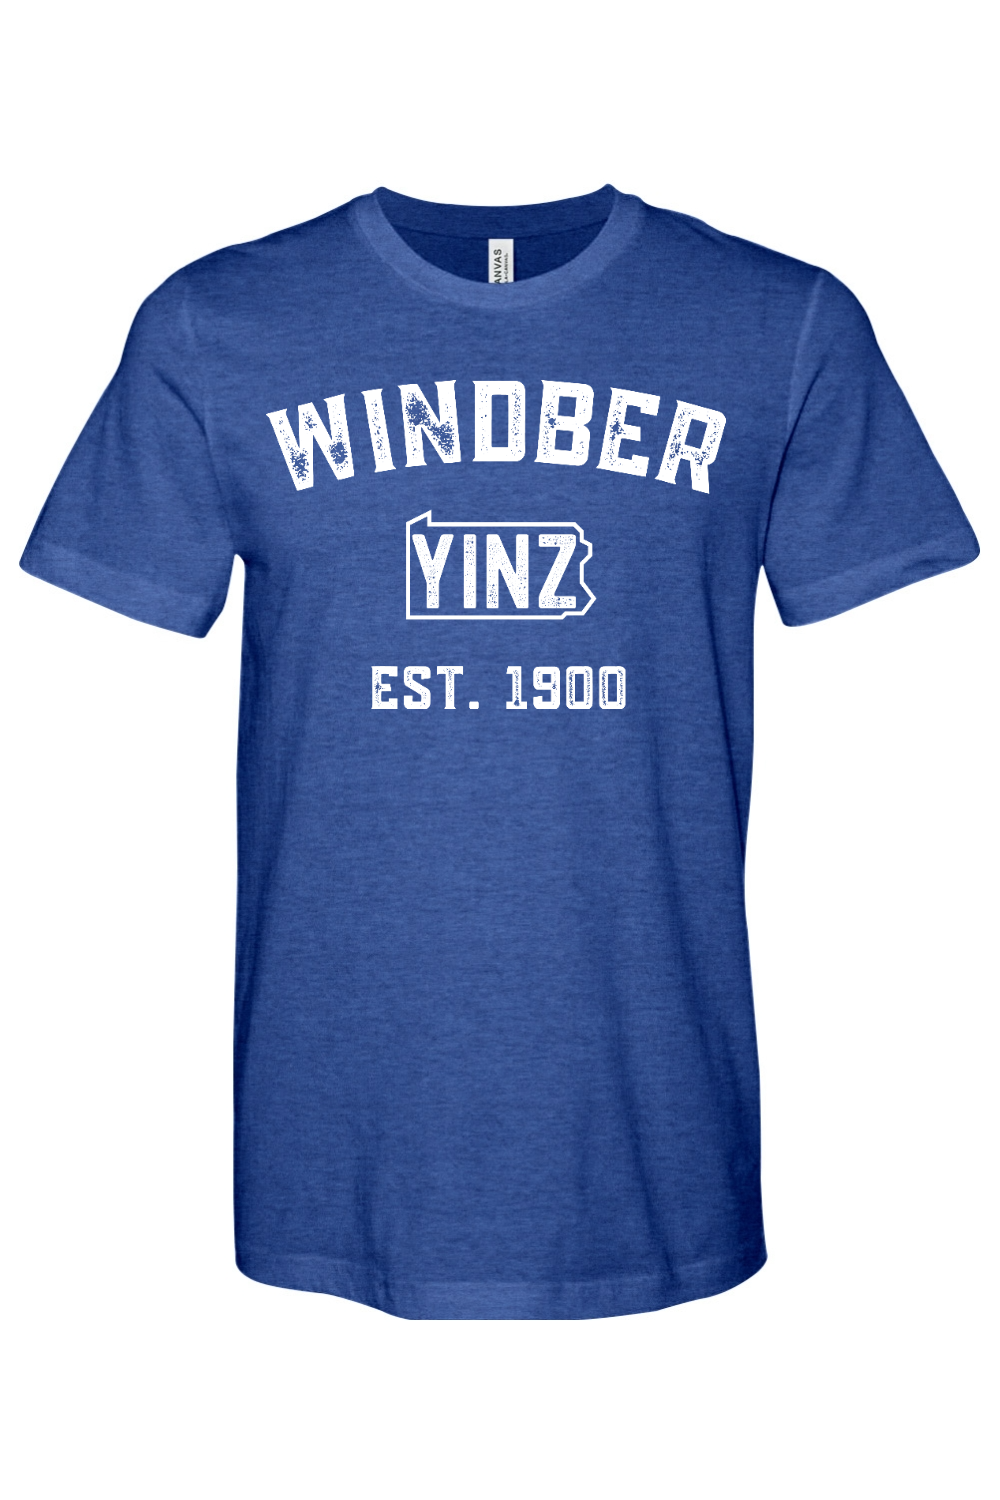 Windber Yinzylvania - Yinzylvania